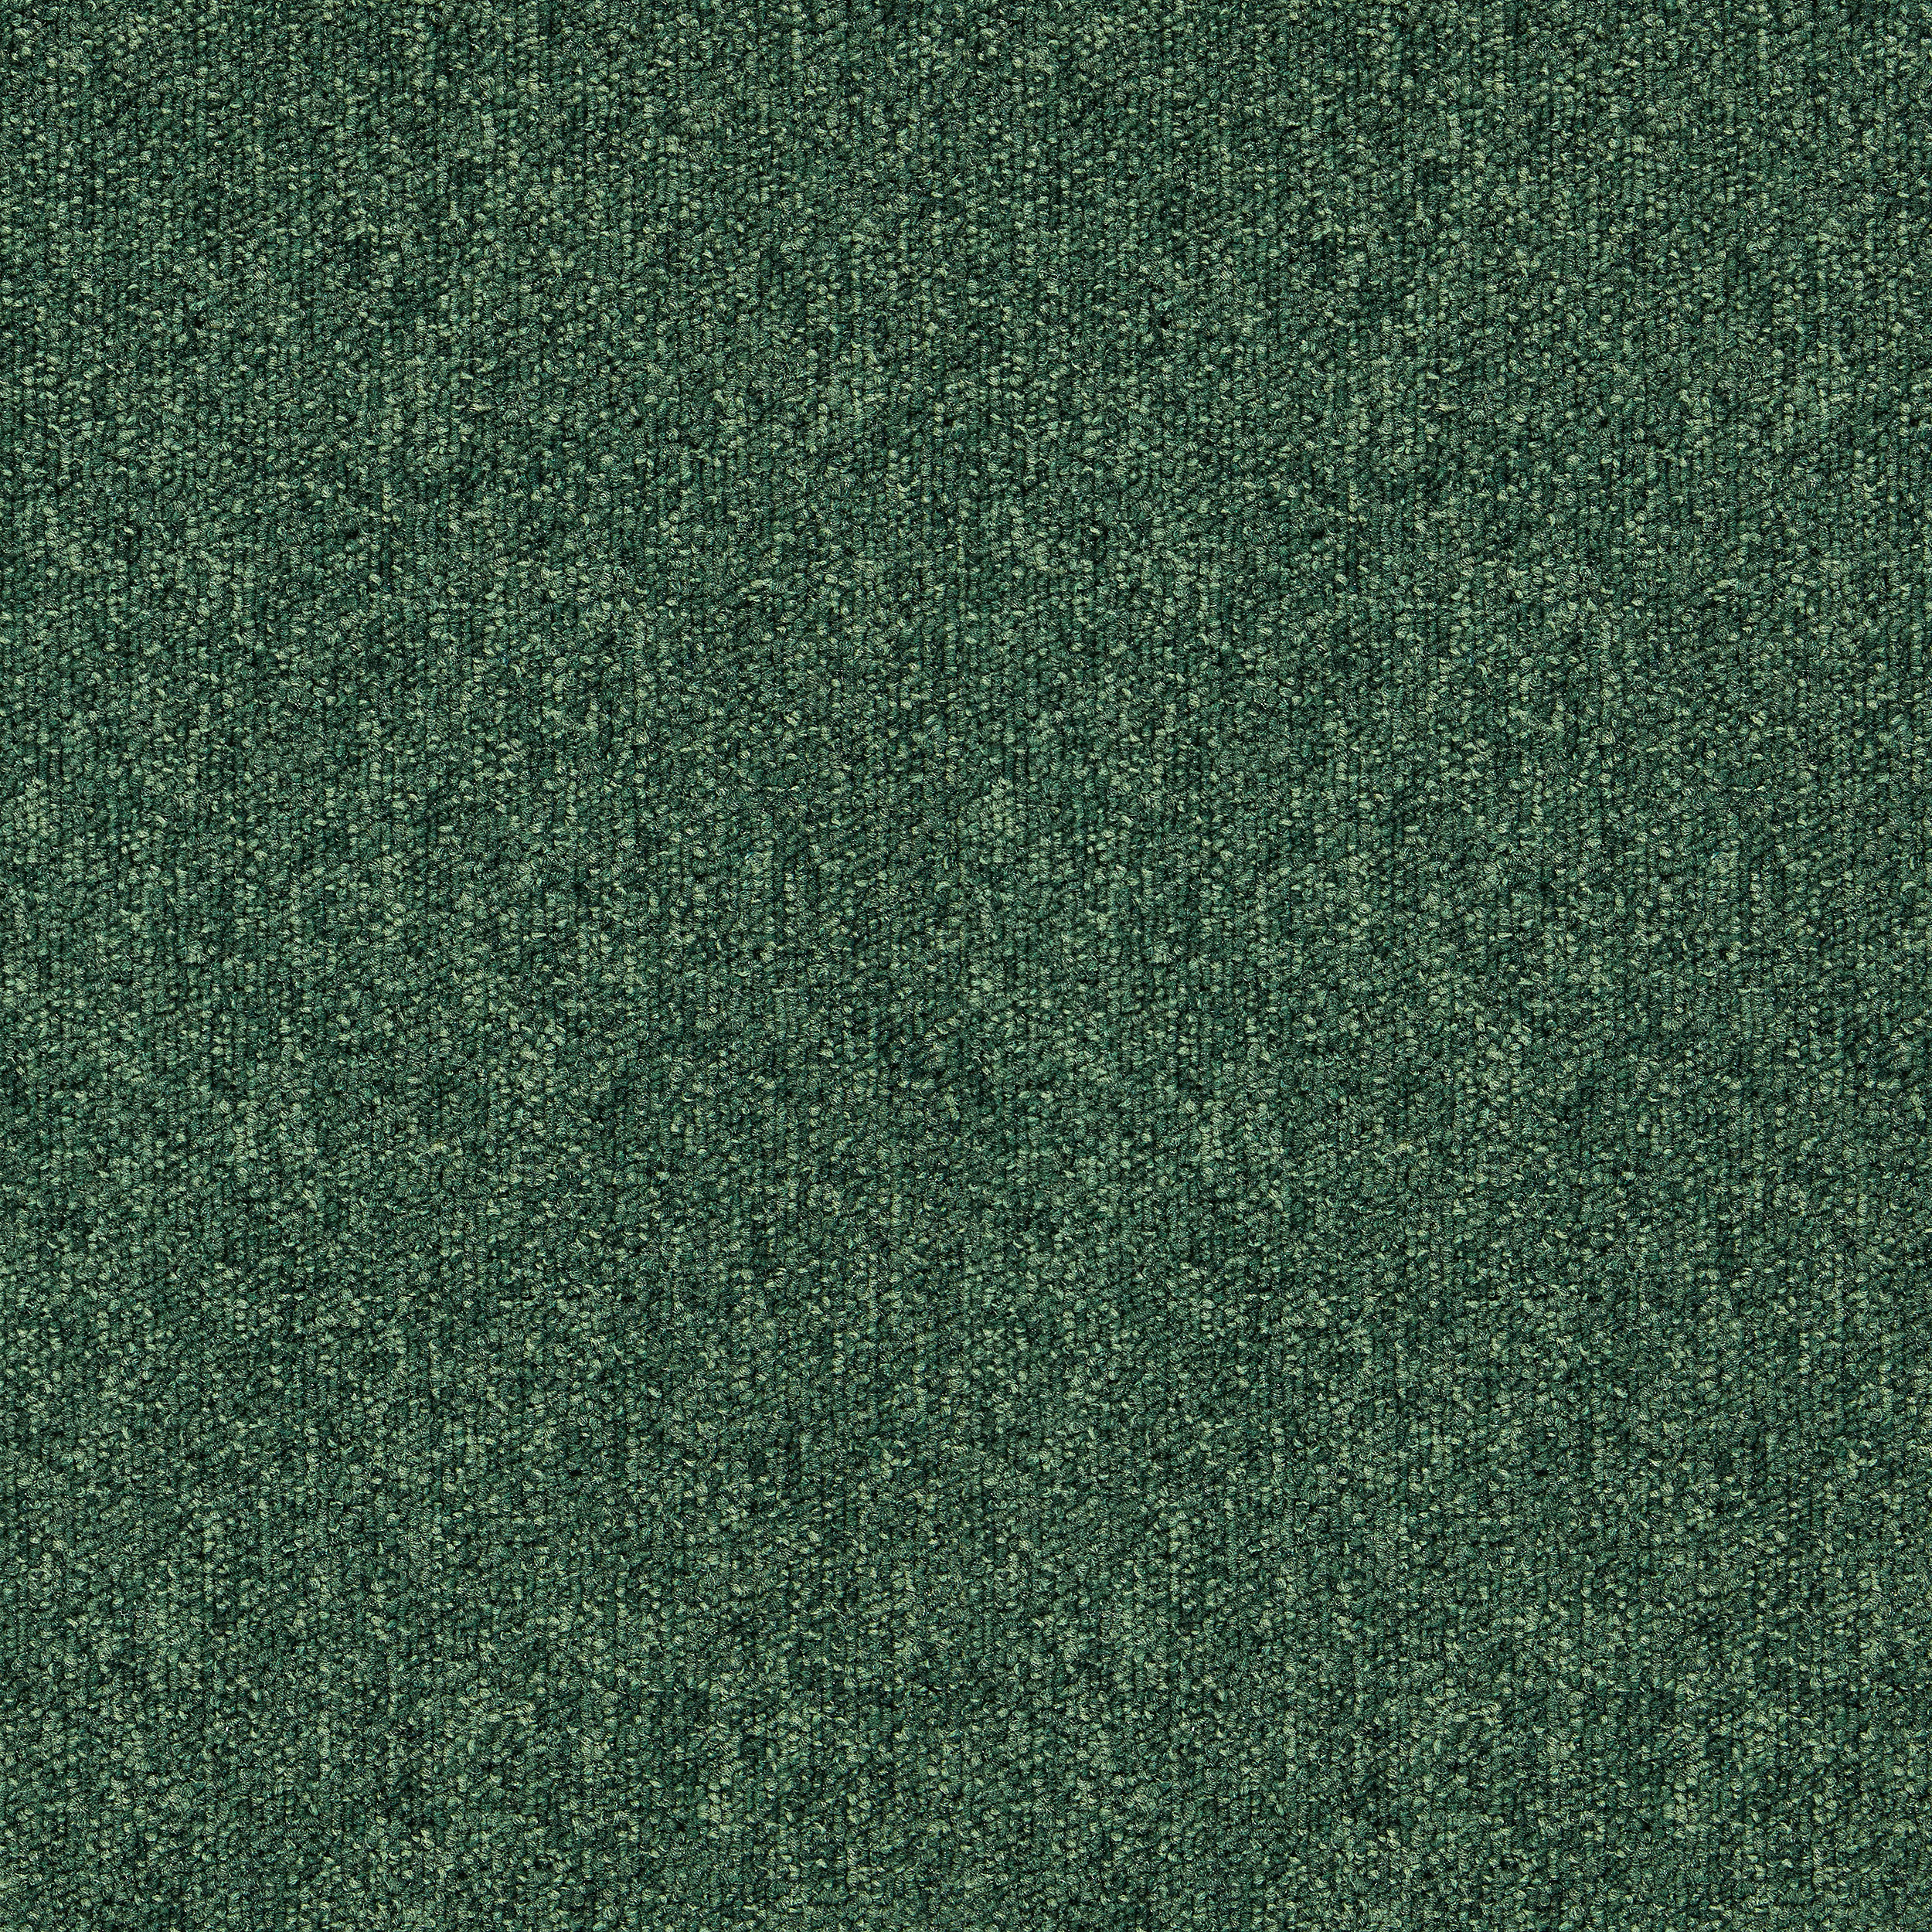 Heuga 727 Carpet Tile In Bottle Green número de imagen 13